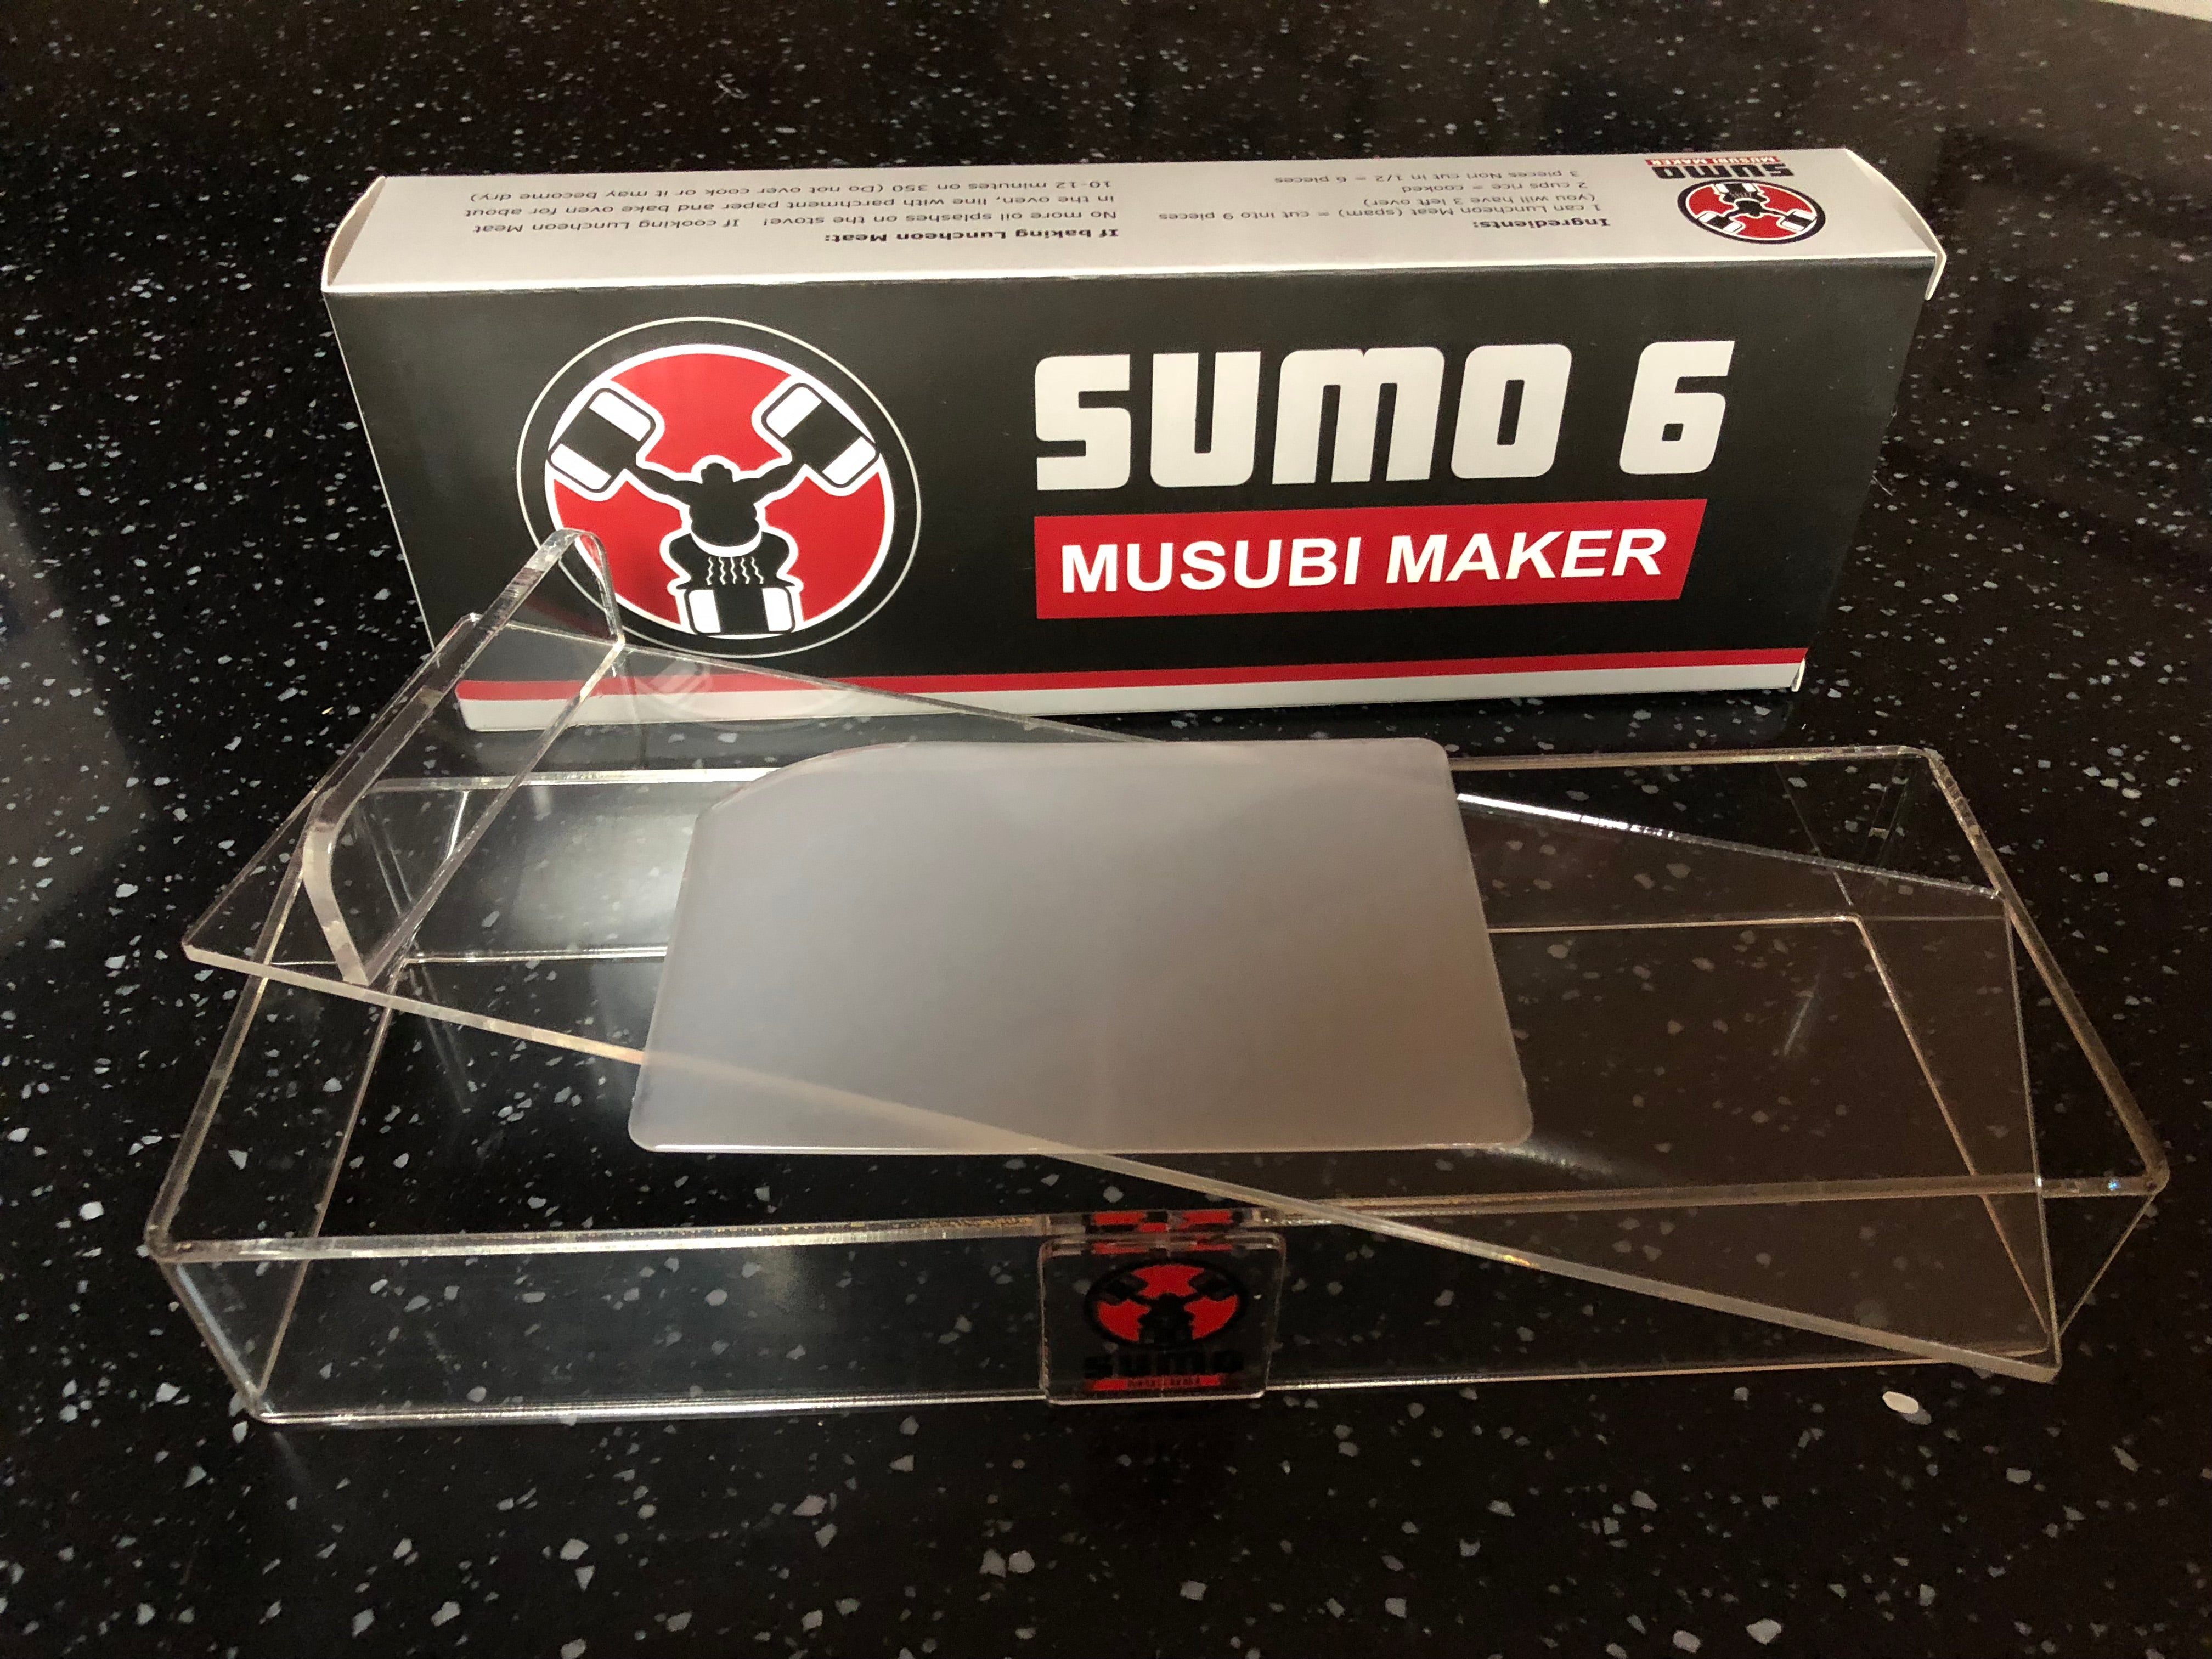 Sumo 6 SETS buy 4 and get a Sumo 4 FREE